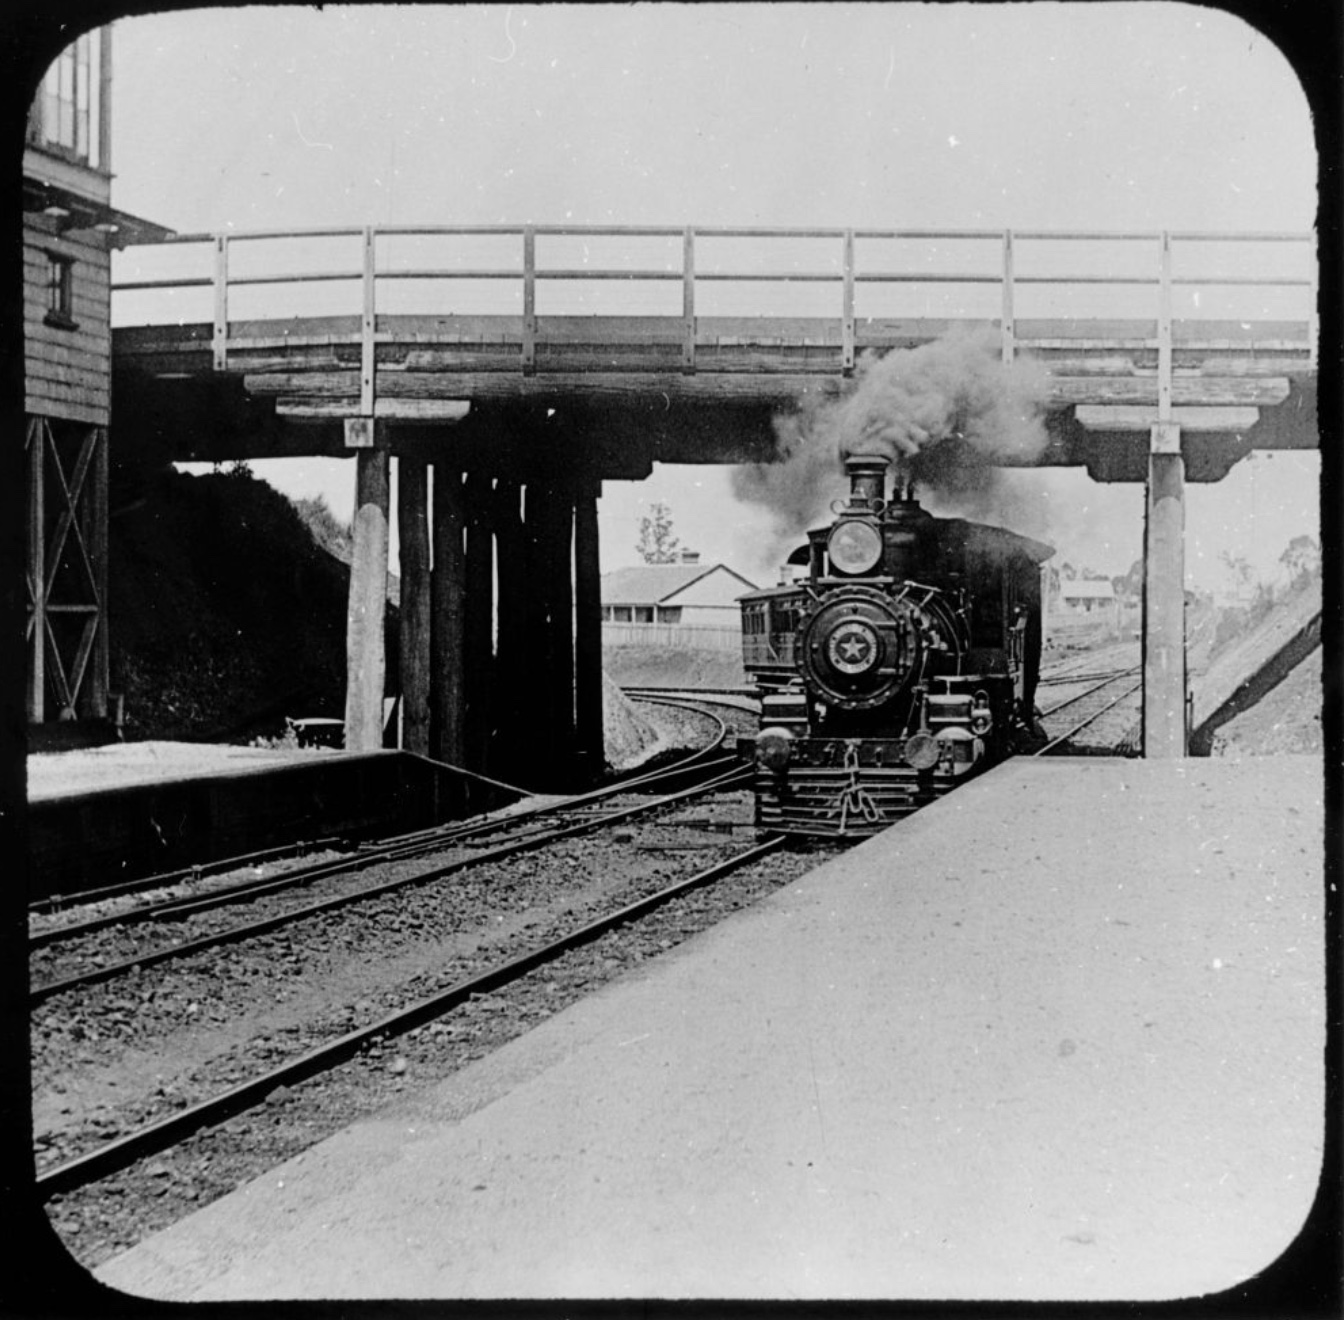 Ascot Railway in the 1880s